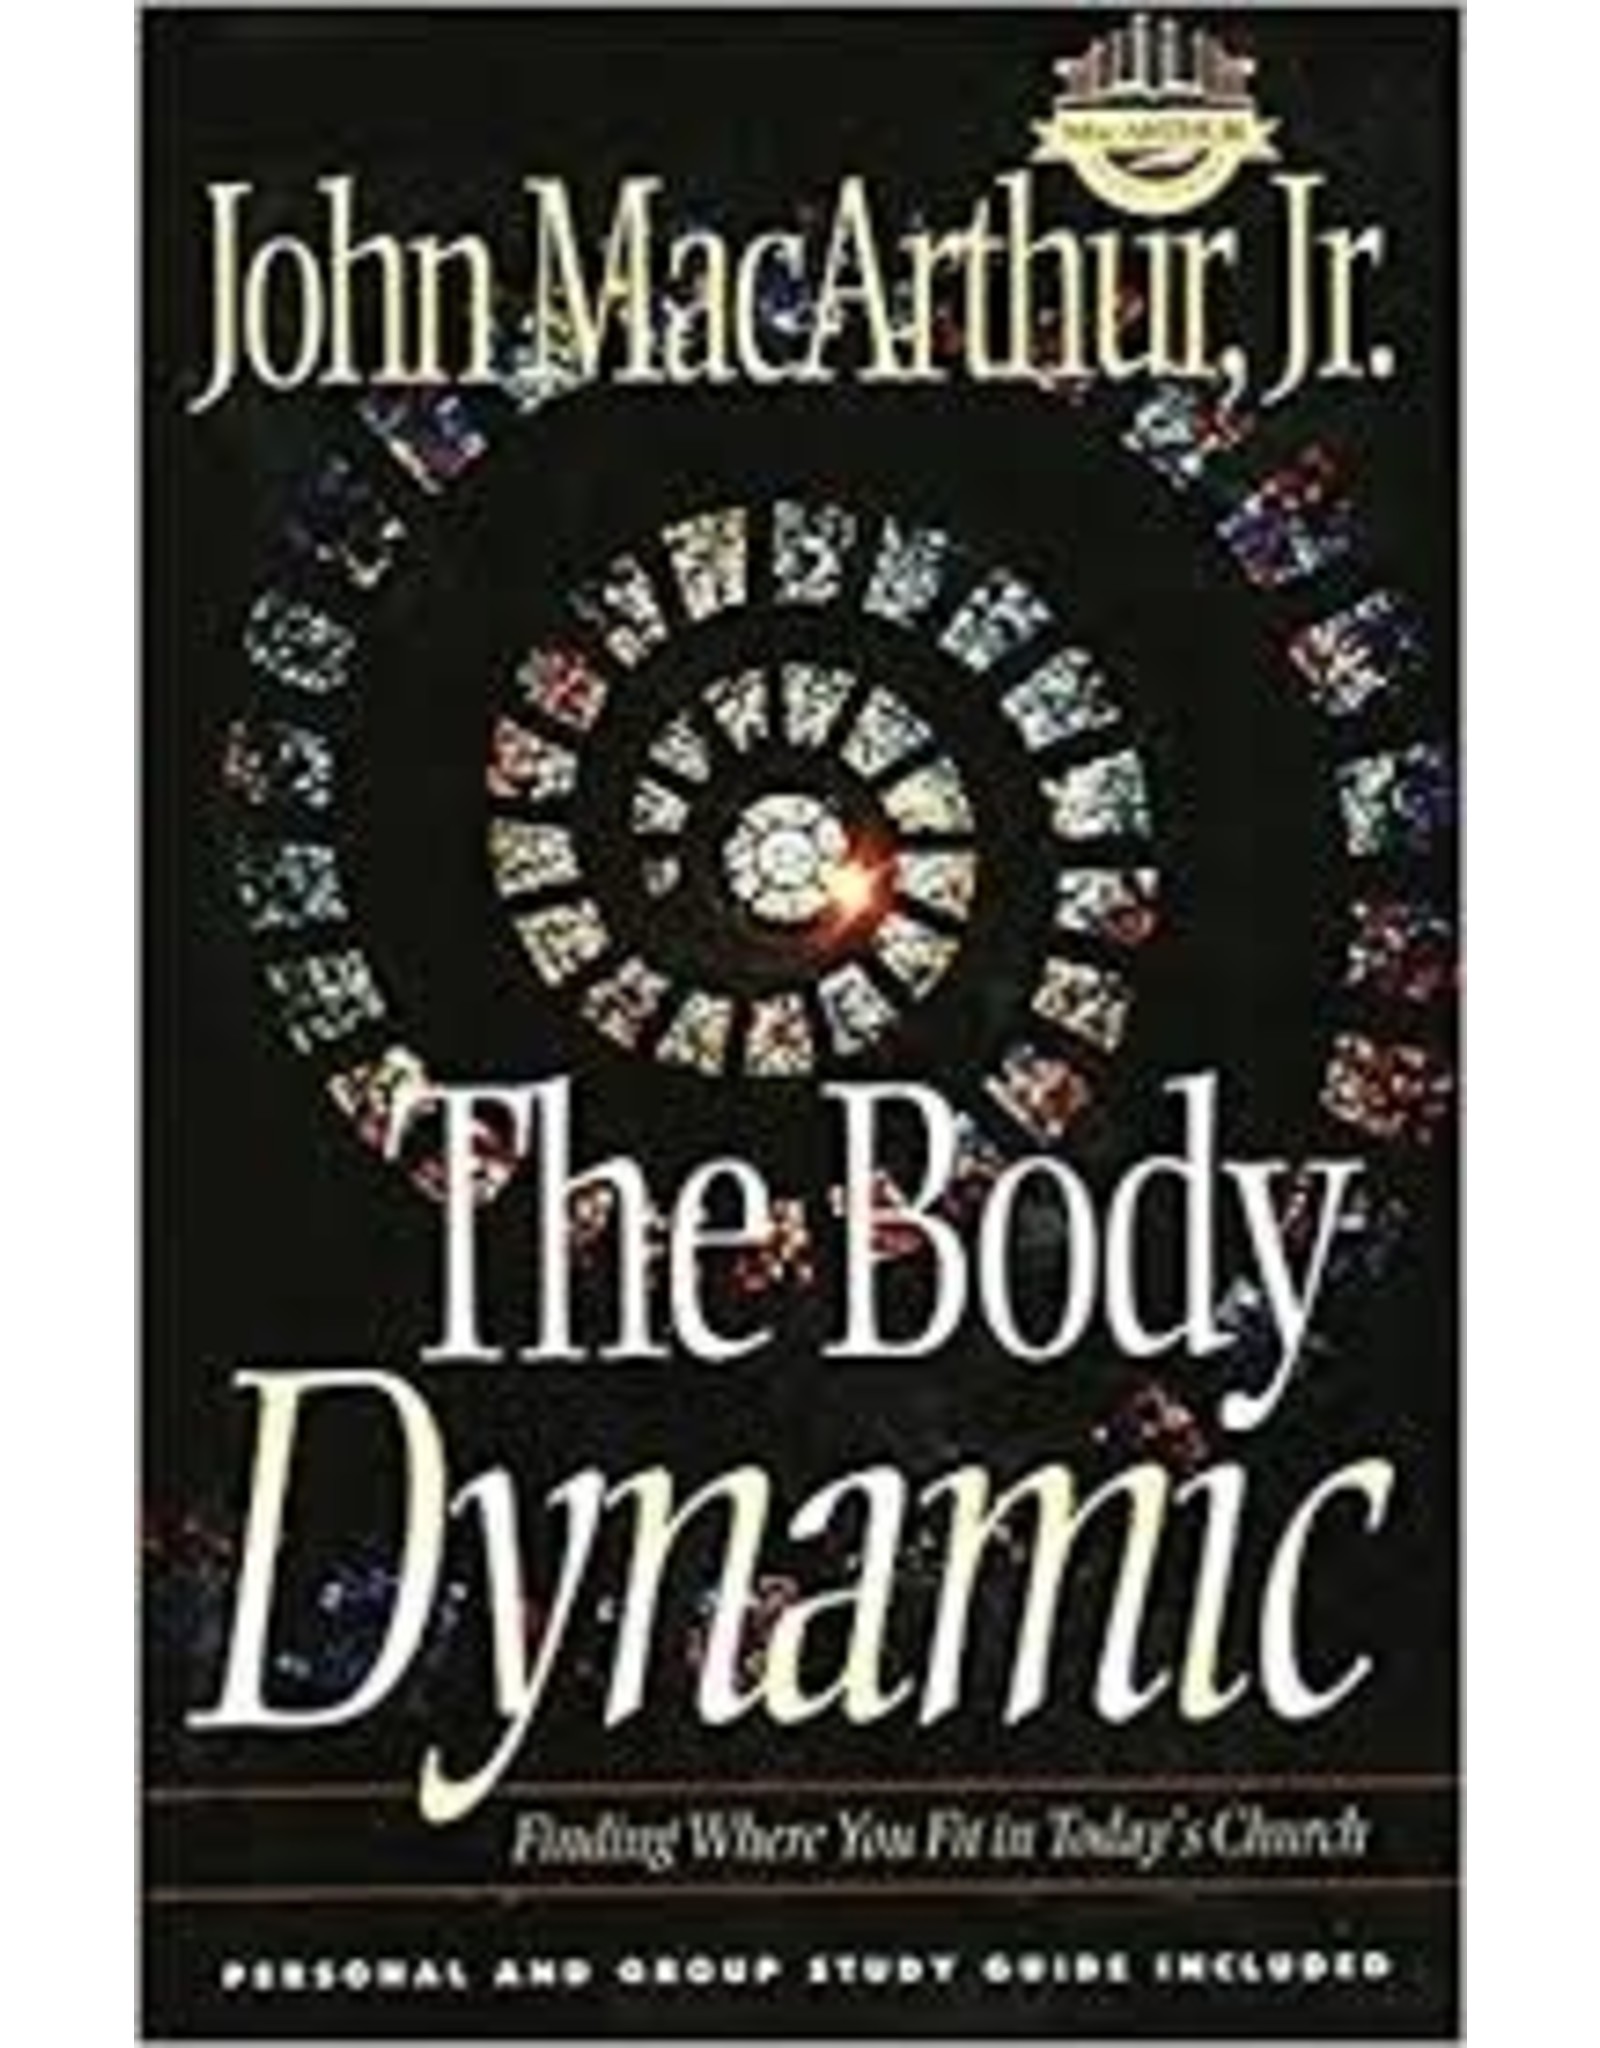 MacArthur The Body Dynamic